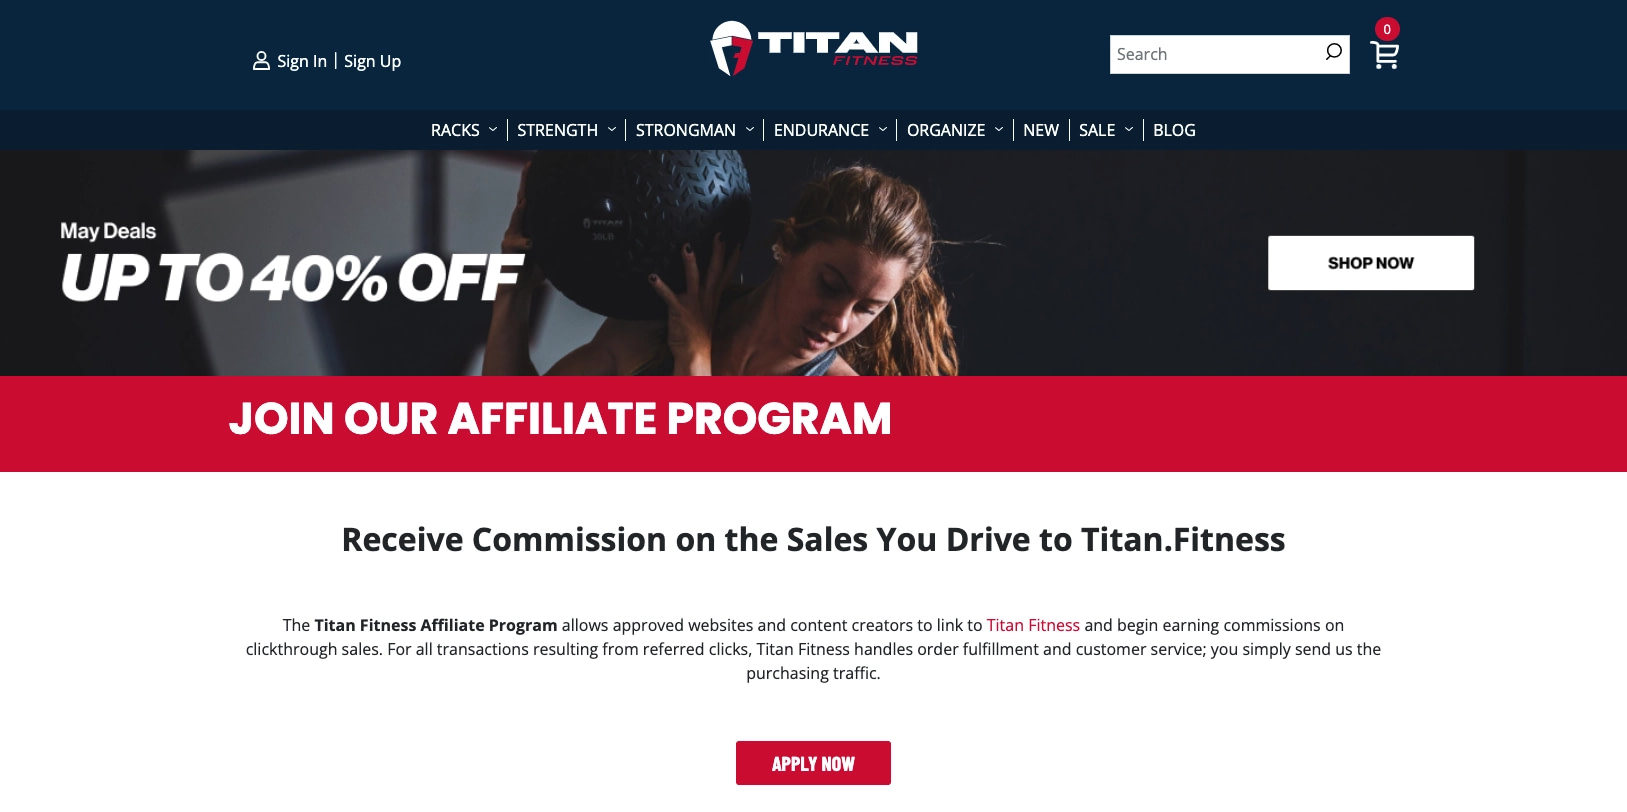 Titan Fitness affiliate program